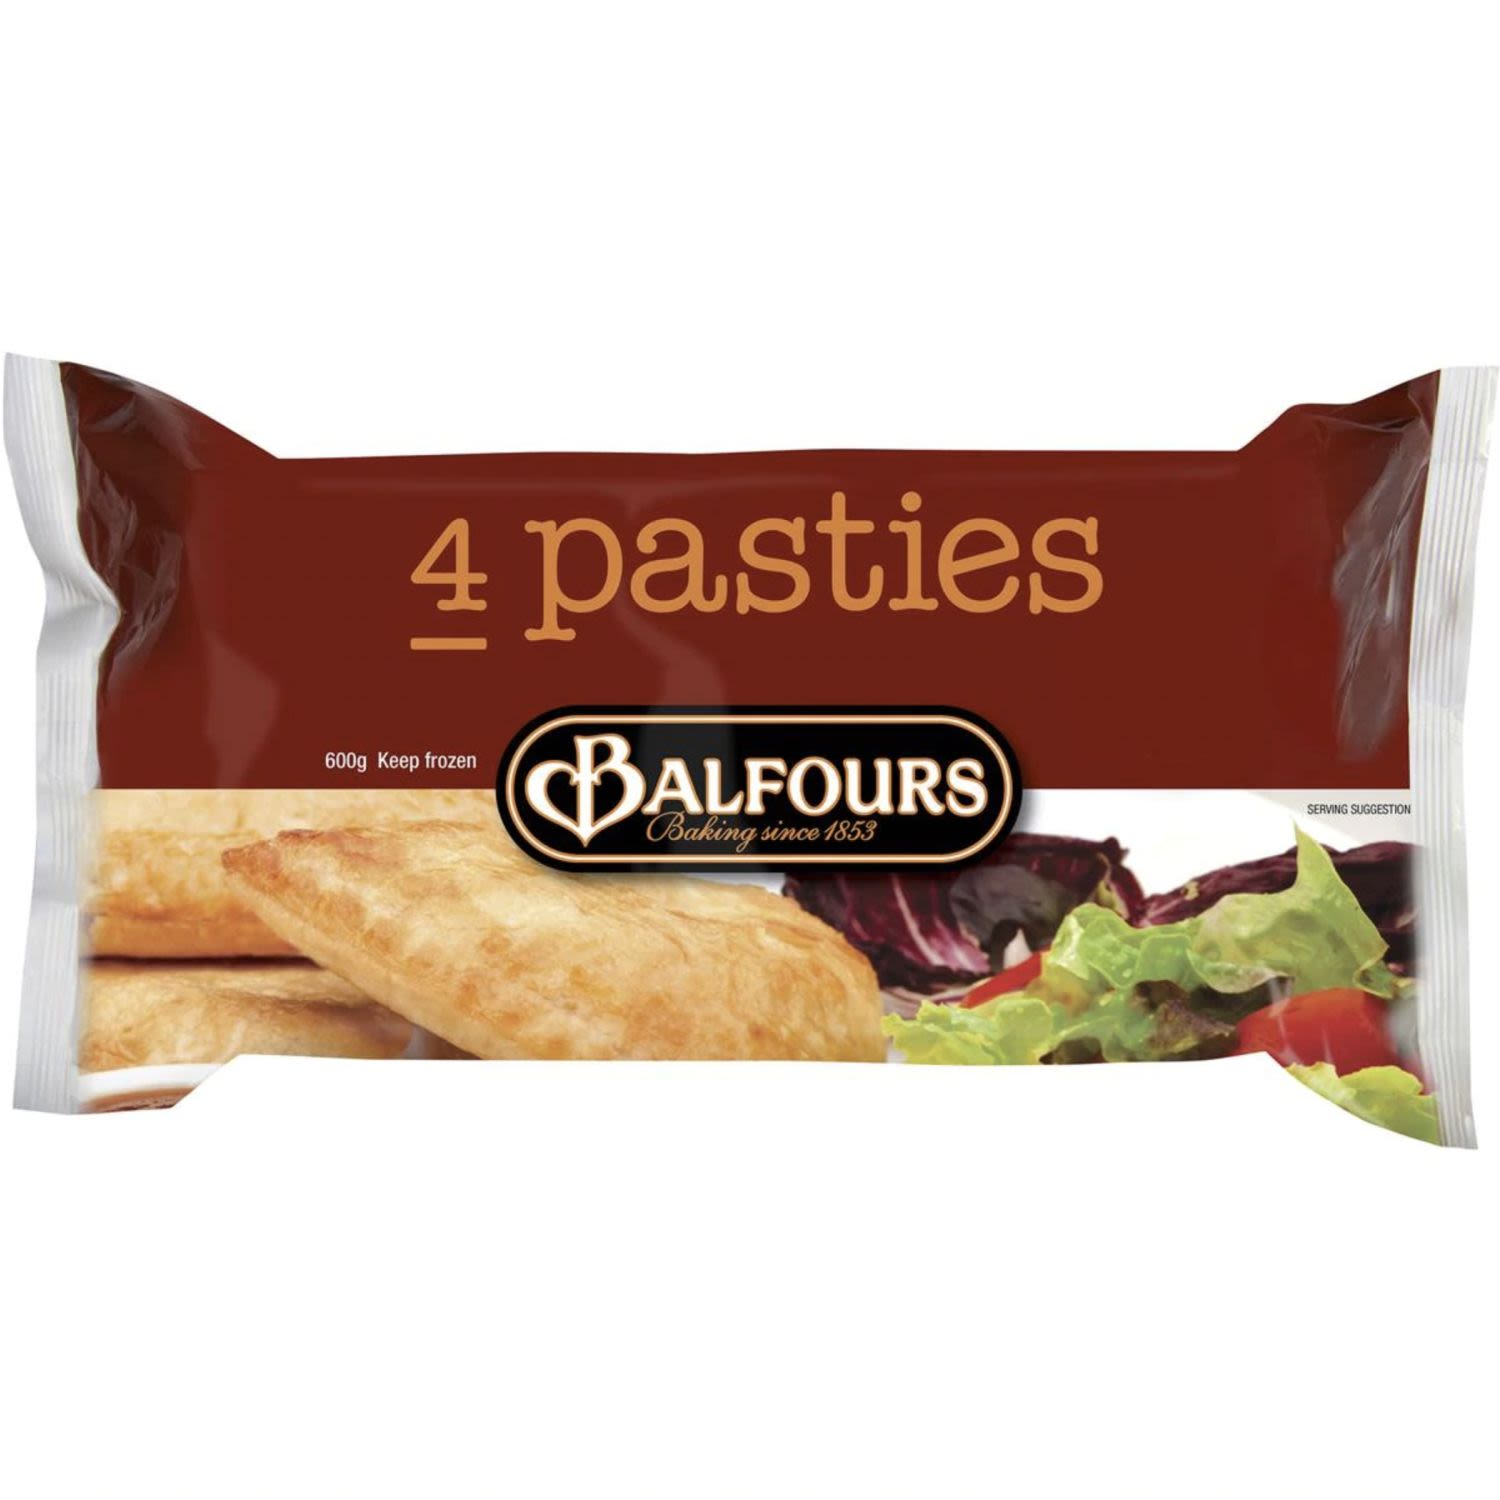 Balfours Frozen Pasty, 4 Each